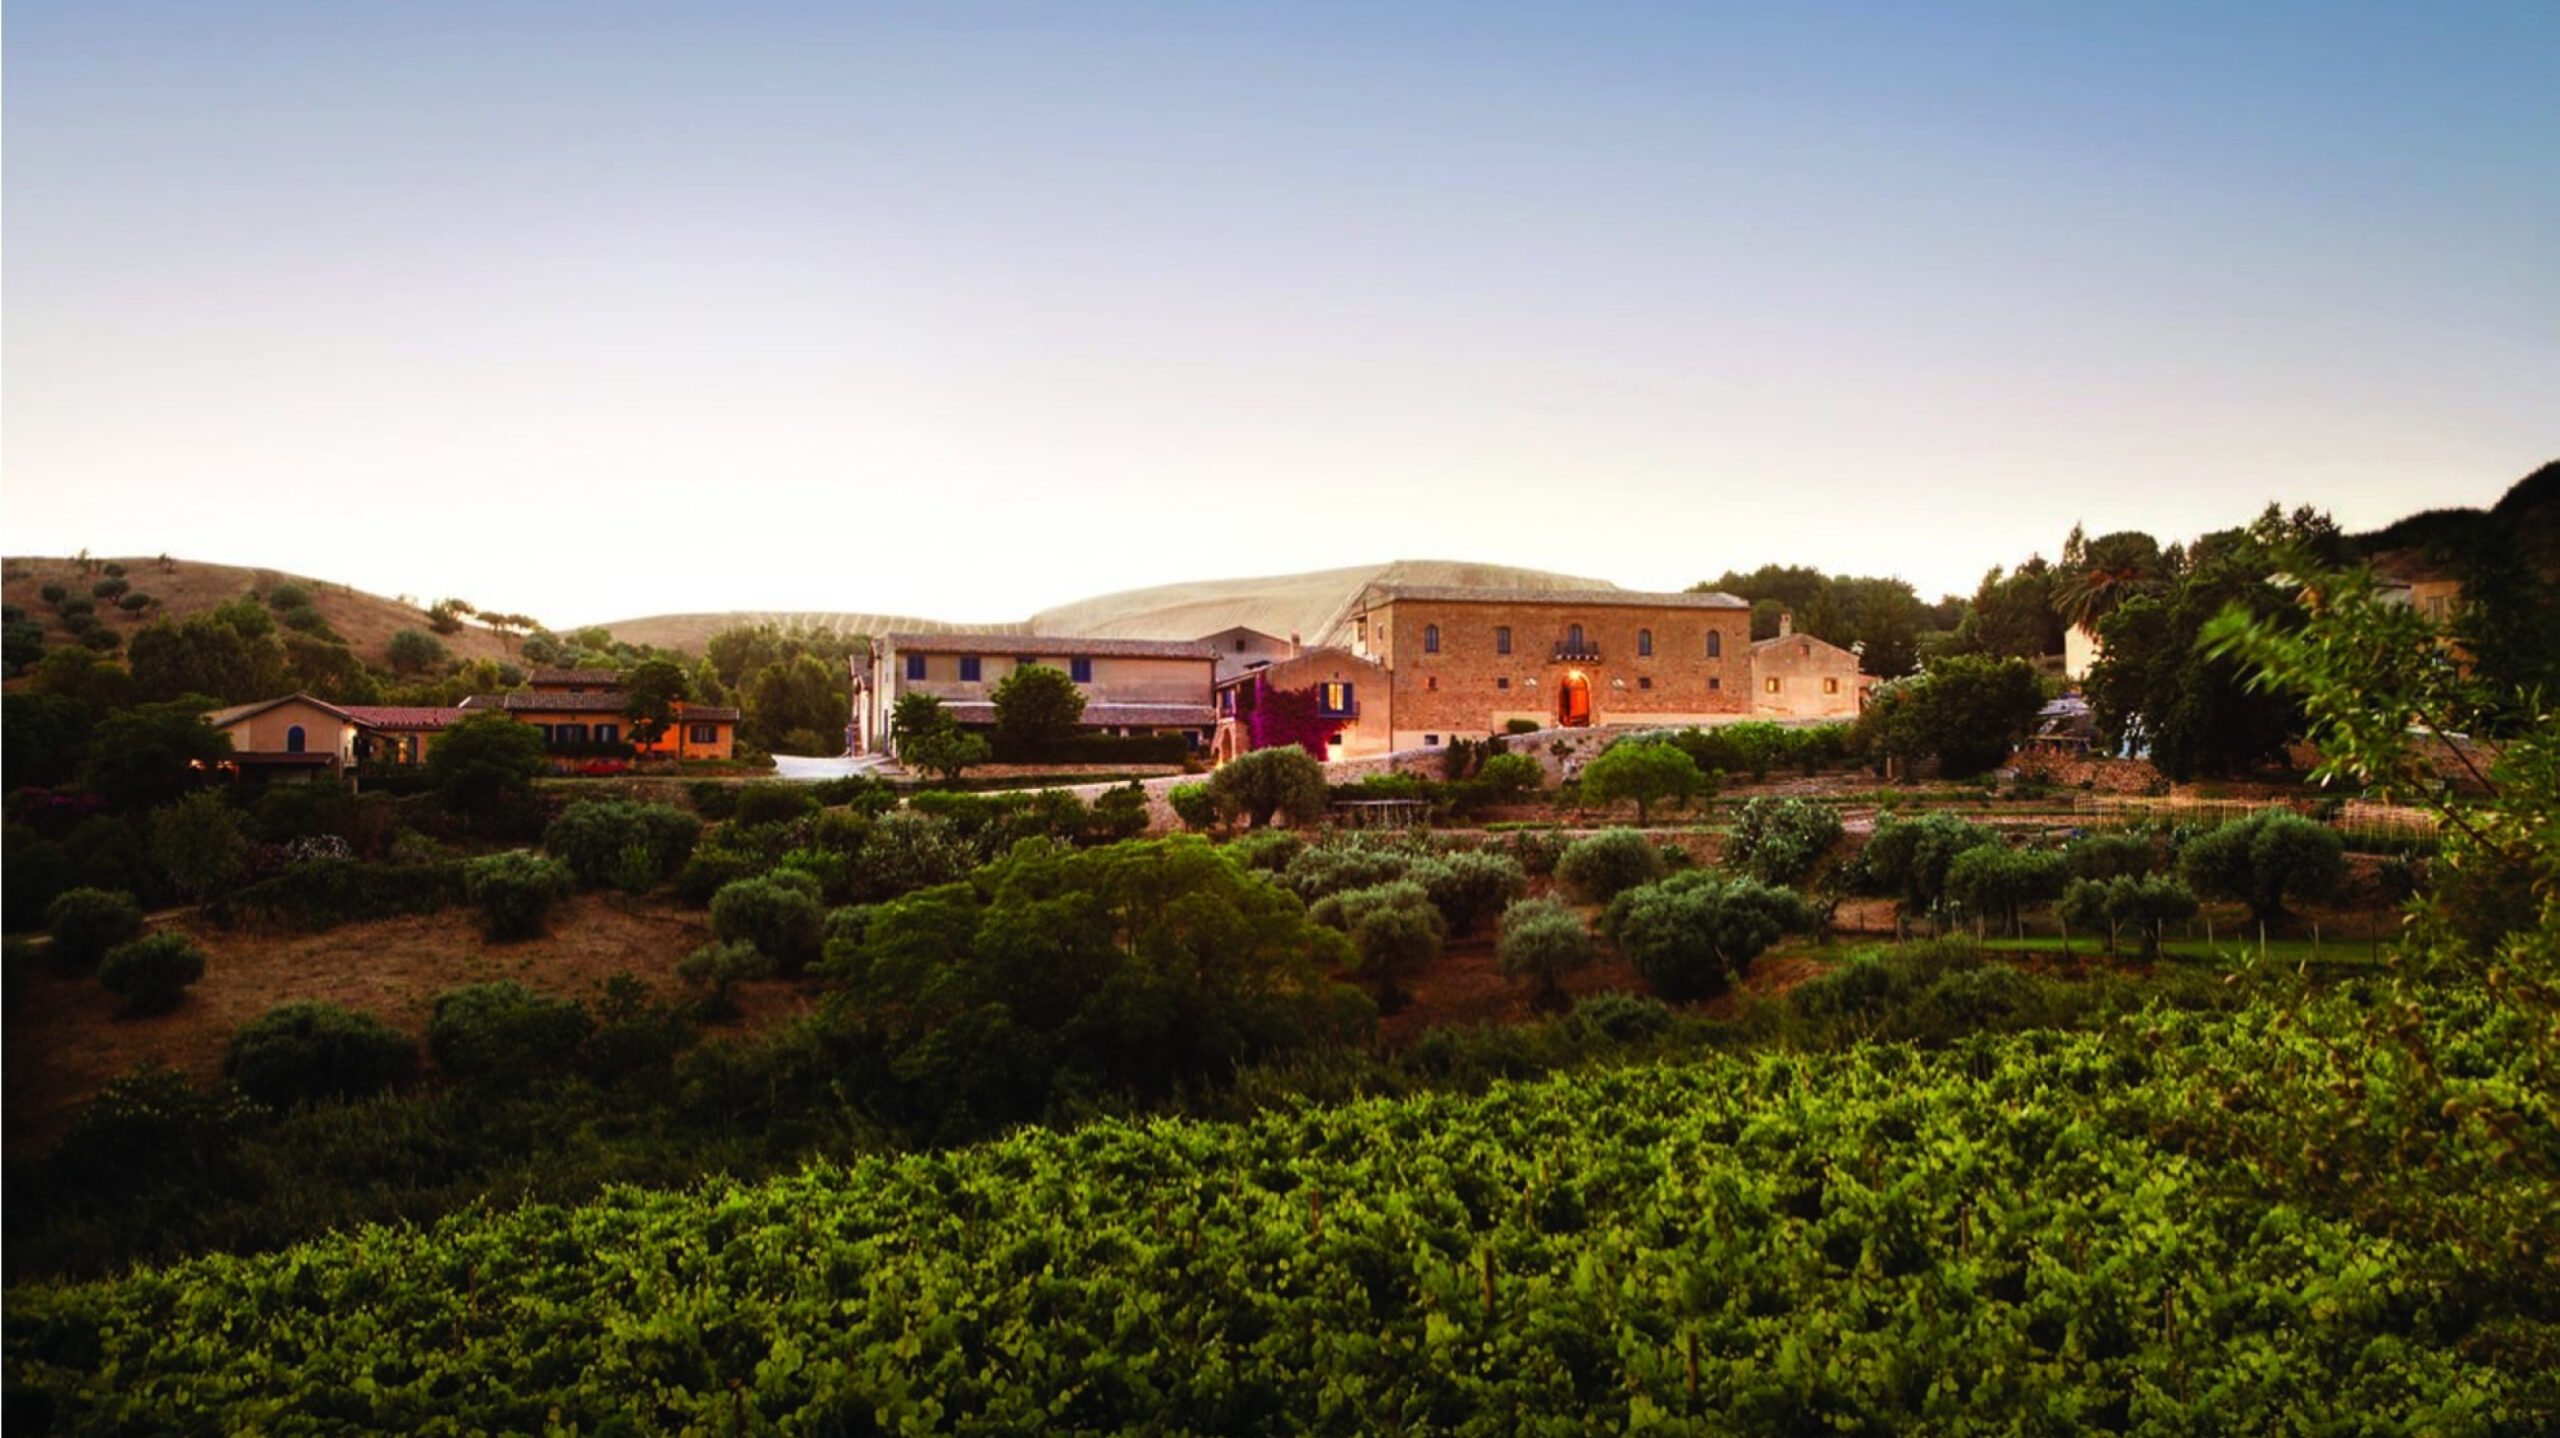 Main building of winery Tenuta Regaleali nestled in lush green vineyards